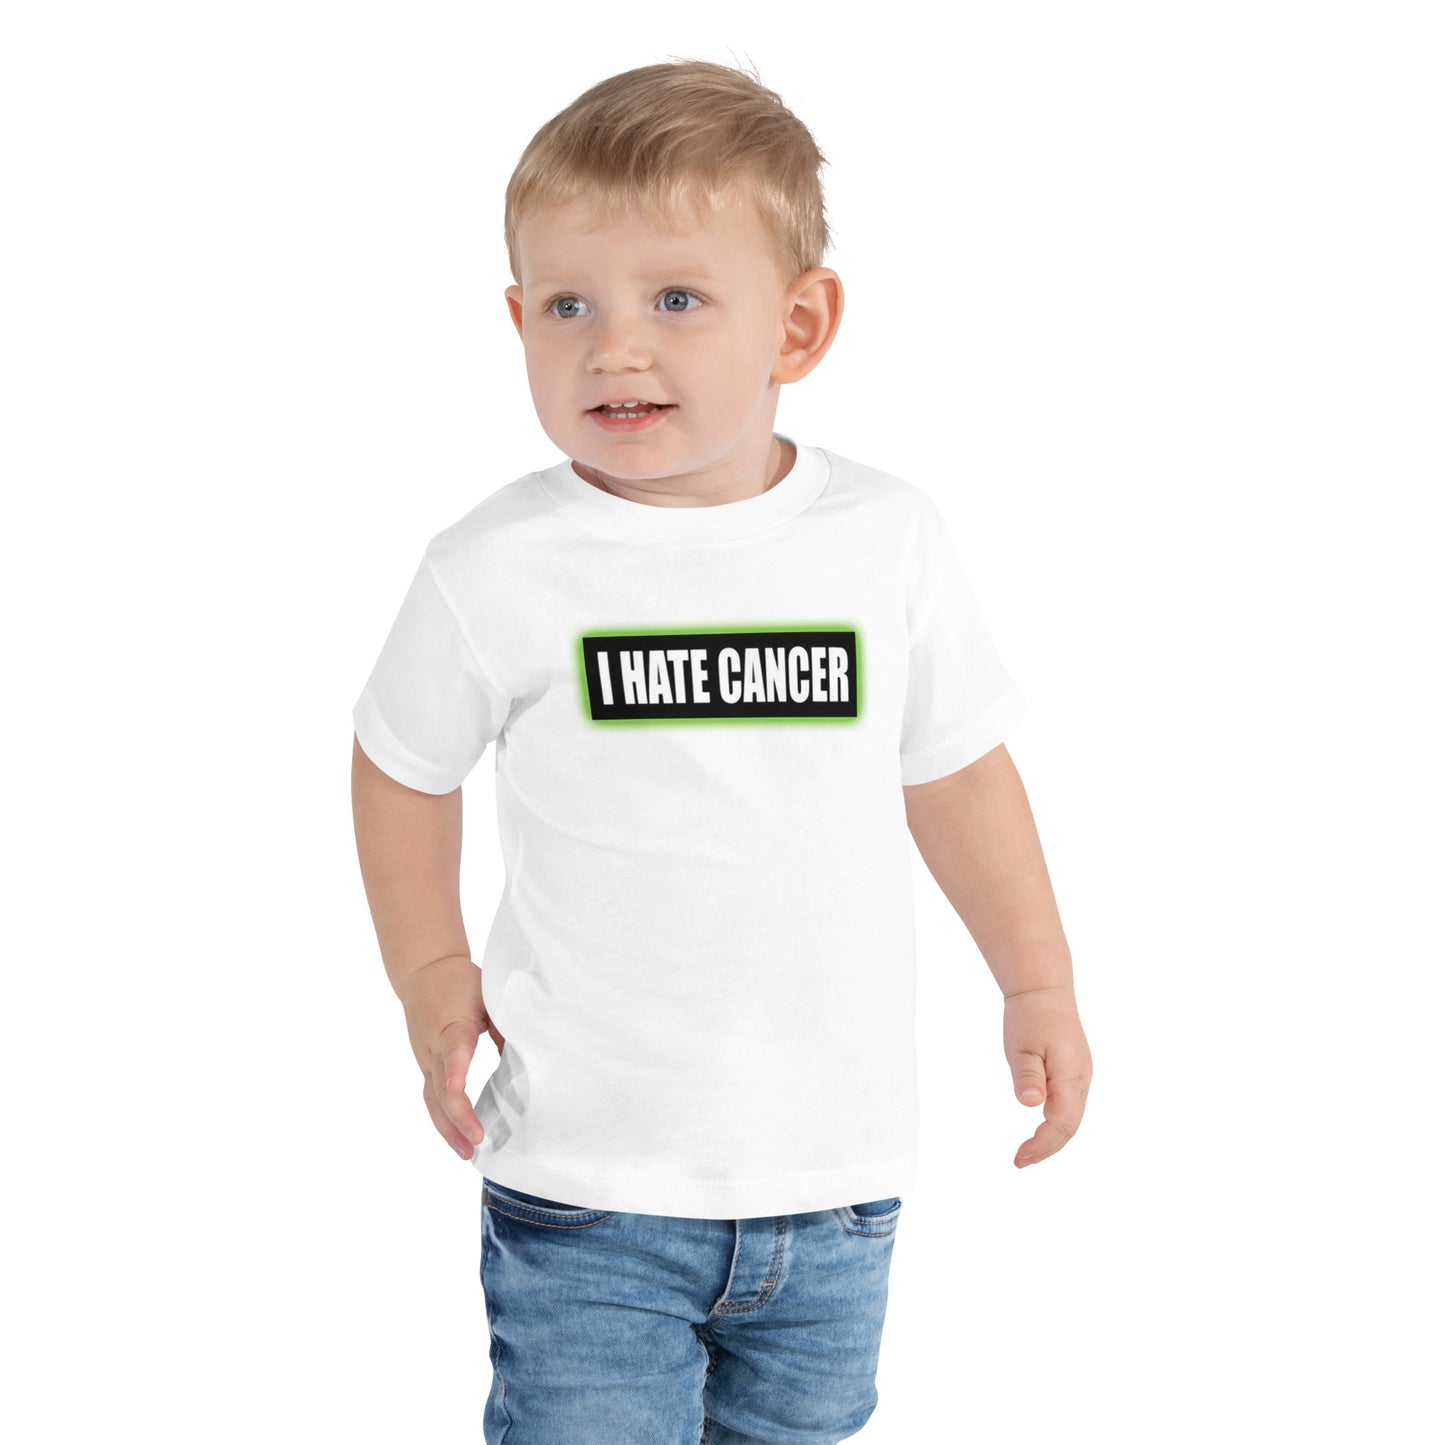 I Hate Cancer - Toddler Short Sleeve Tee